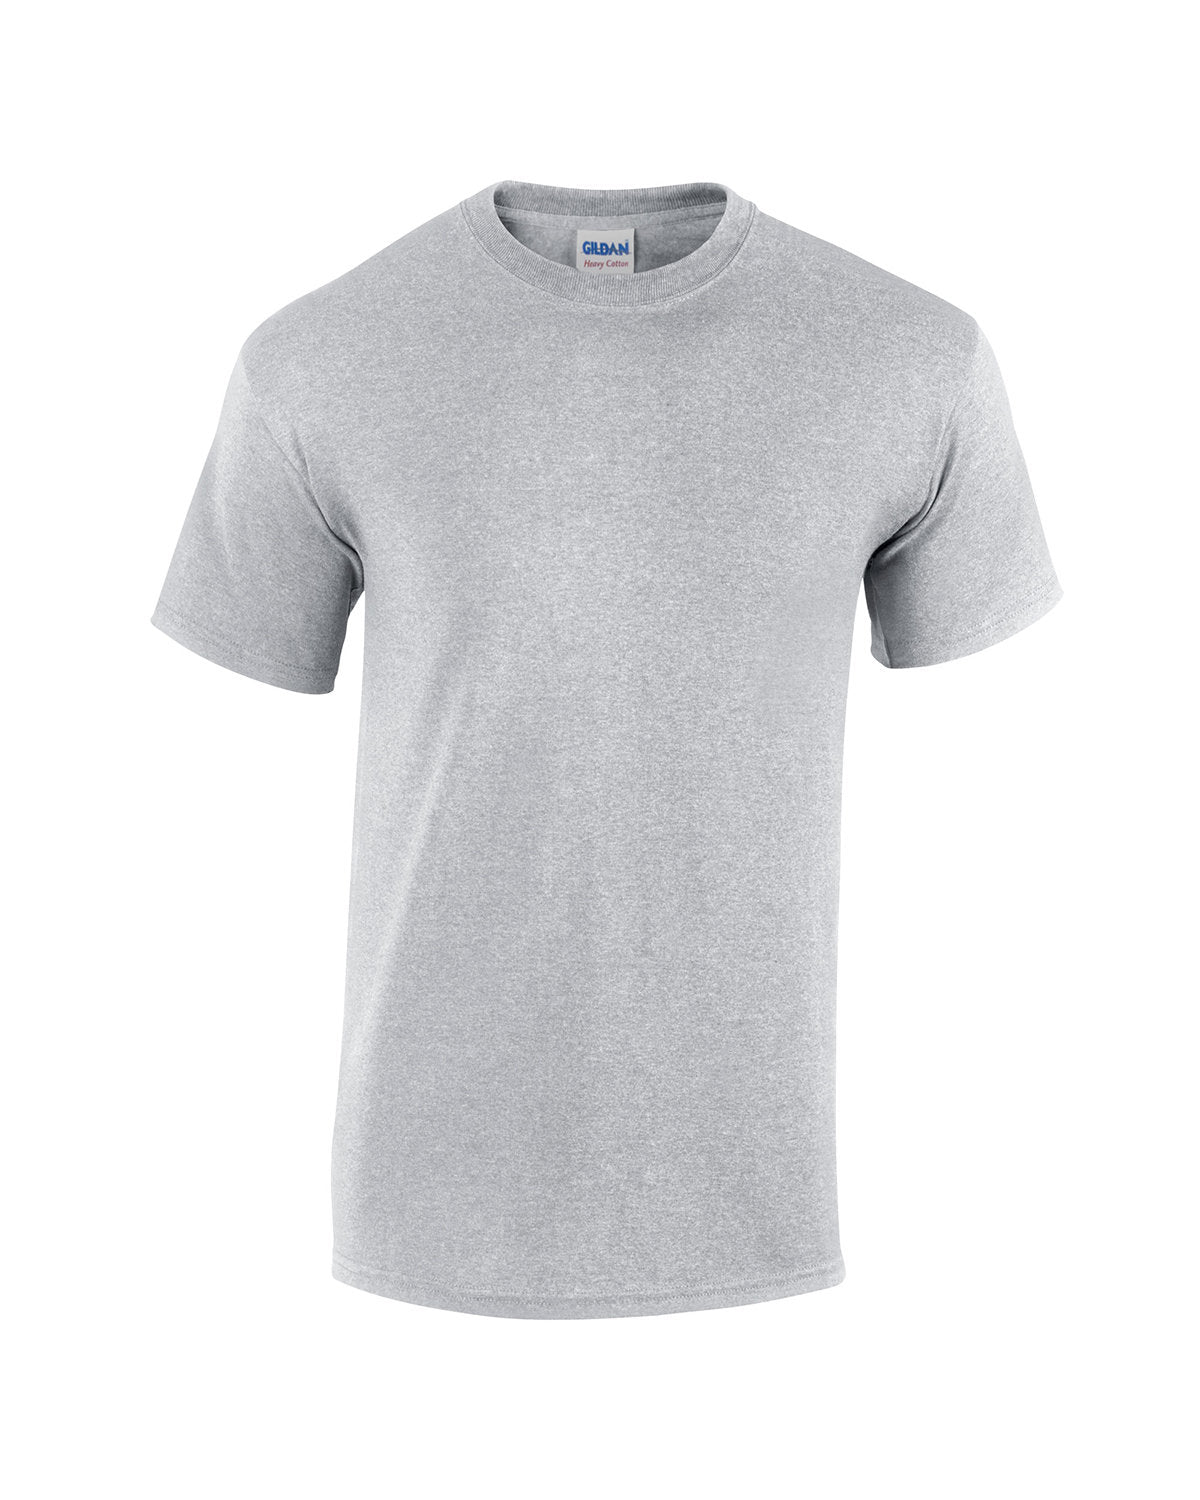 Custom gray shirt